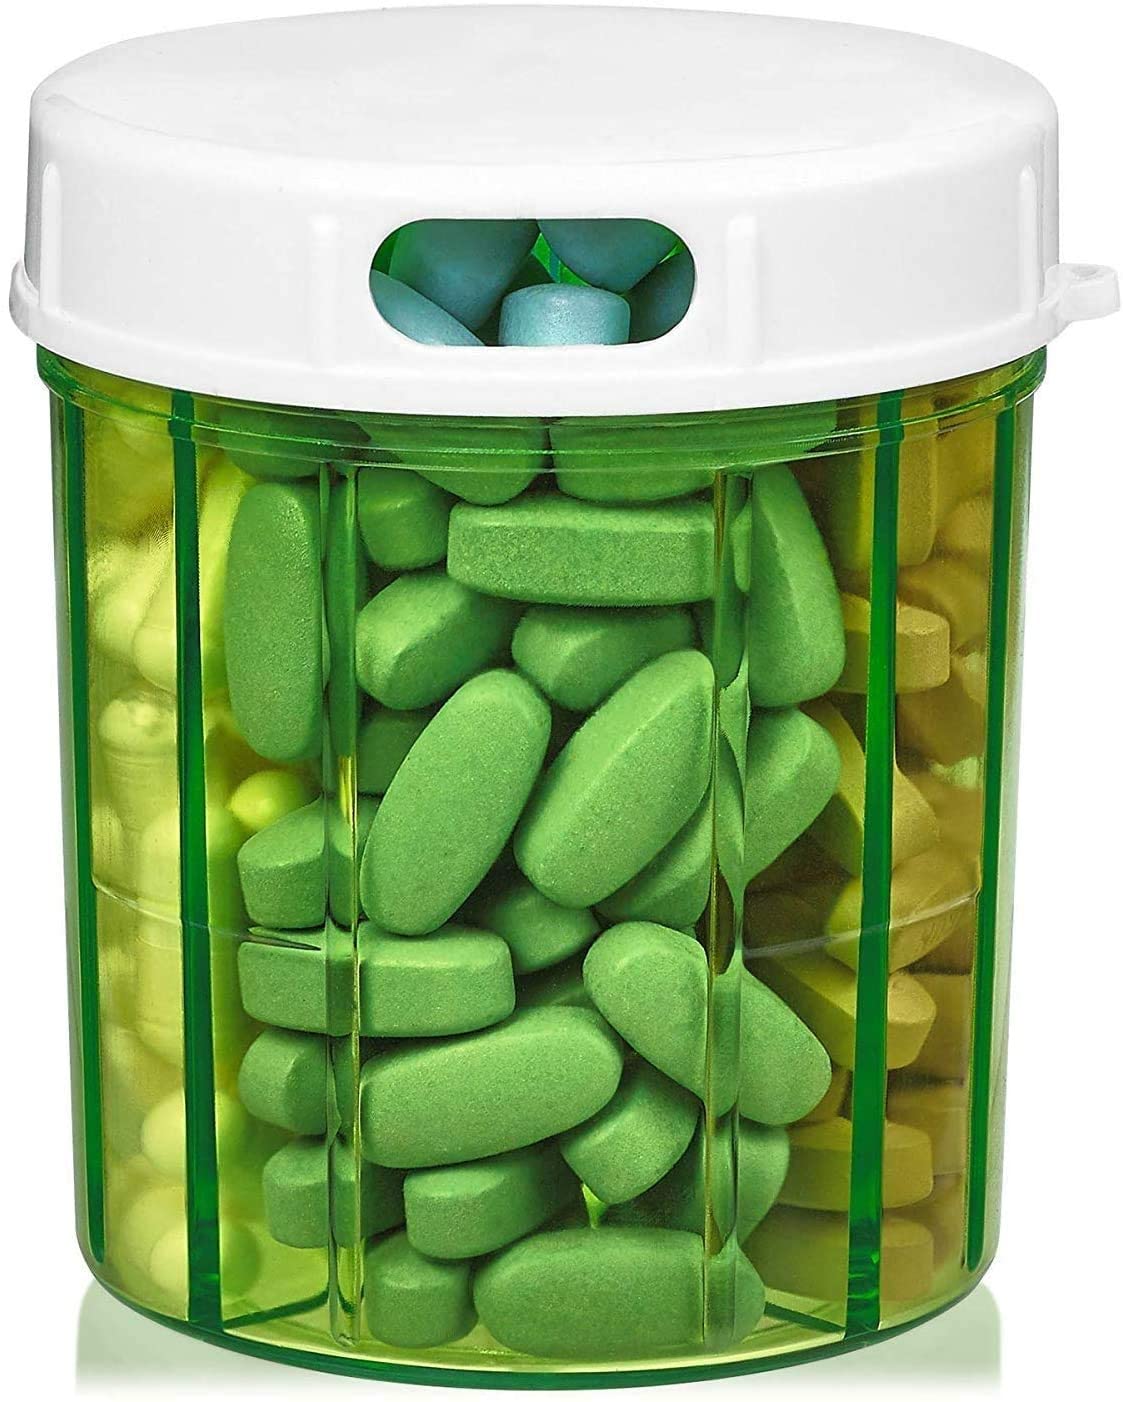 Pills Round Bottle, Dispenser For Weekly Medicine Container